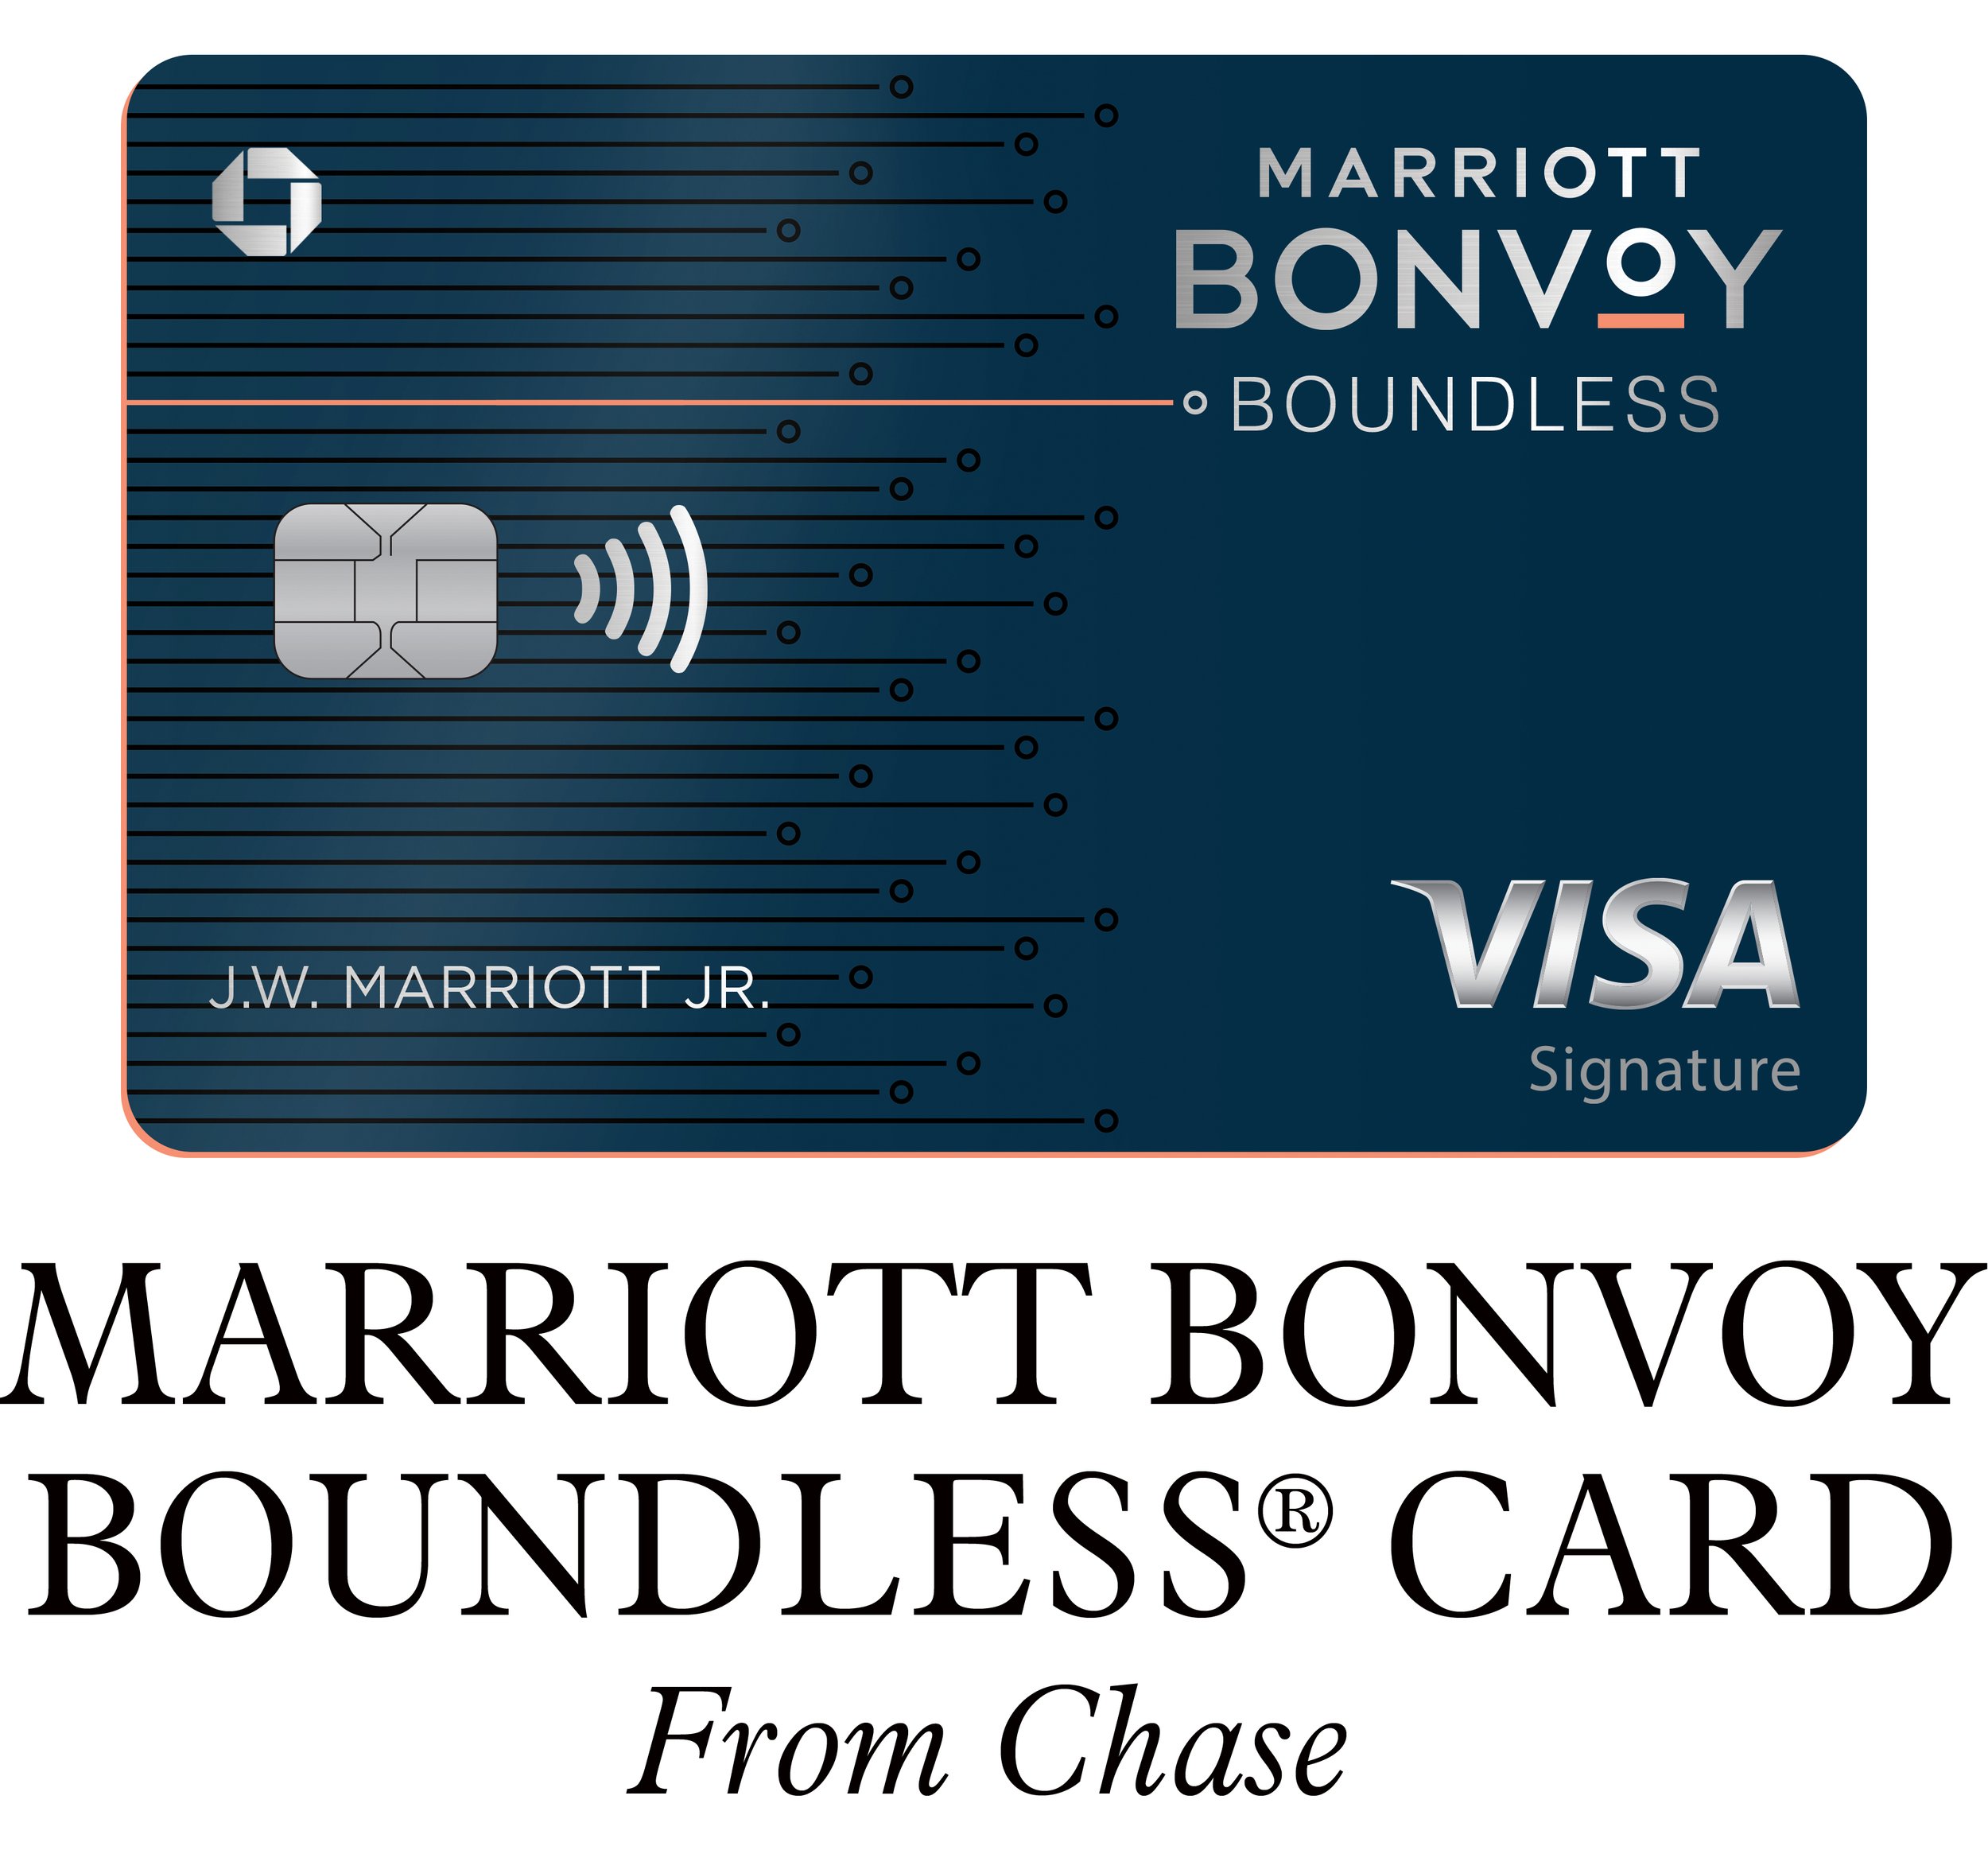 MRRT22_Bonvoy_Boundless_VisaSig_CardName-FC-LockUp_Vertical_Centered_CMYK.jpg